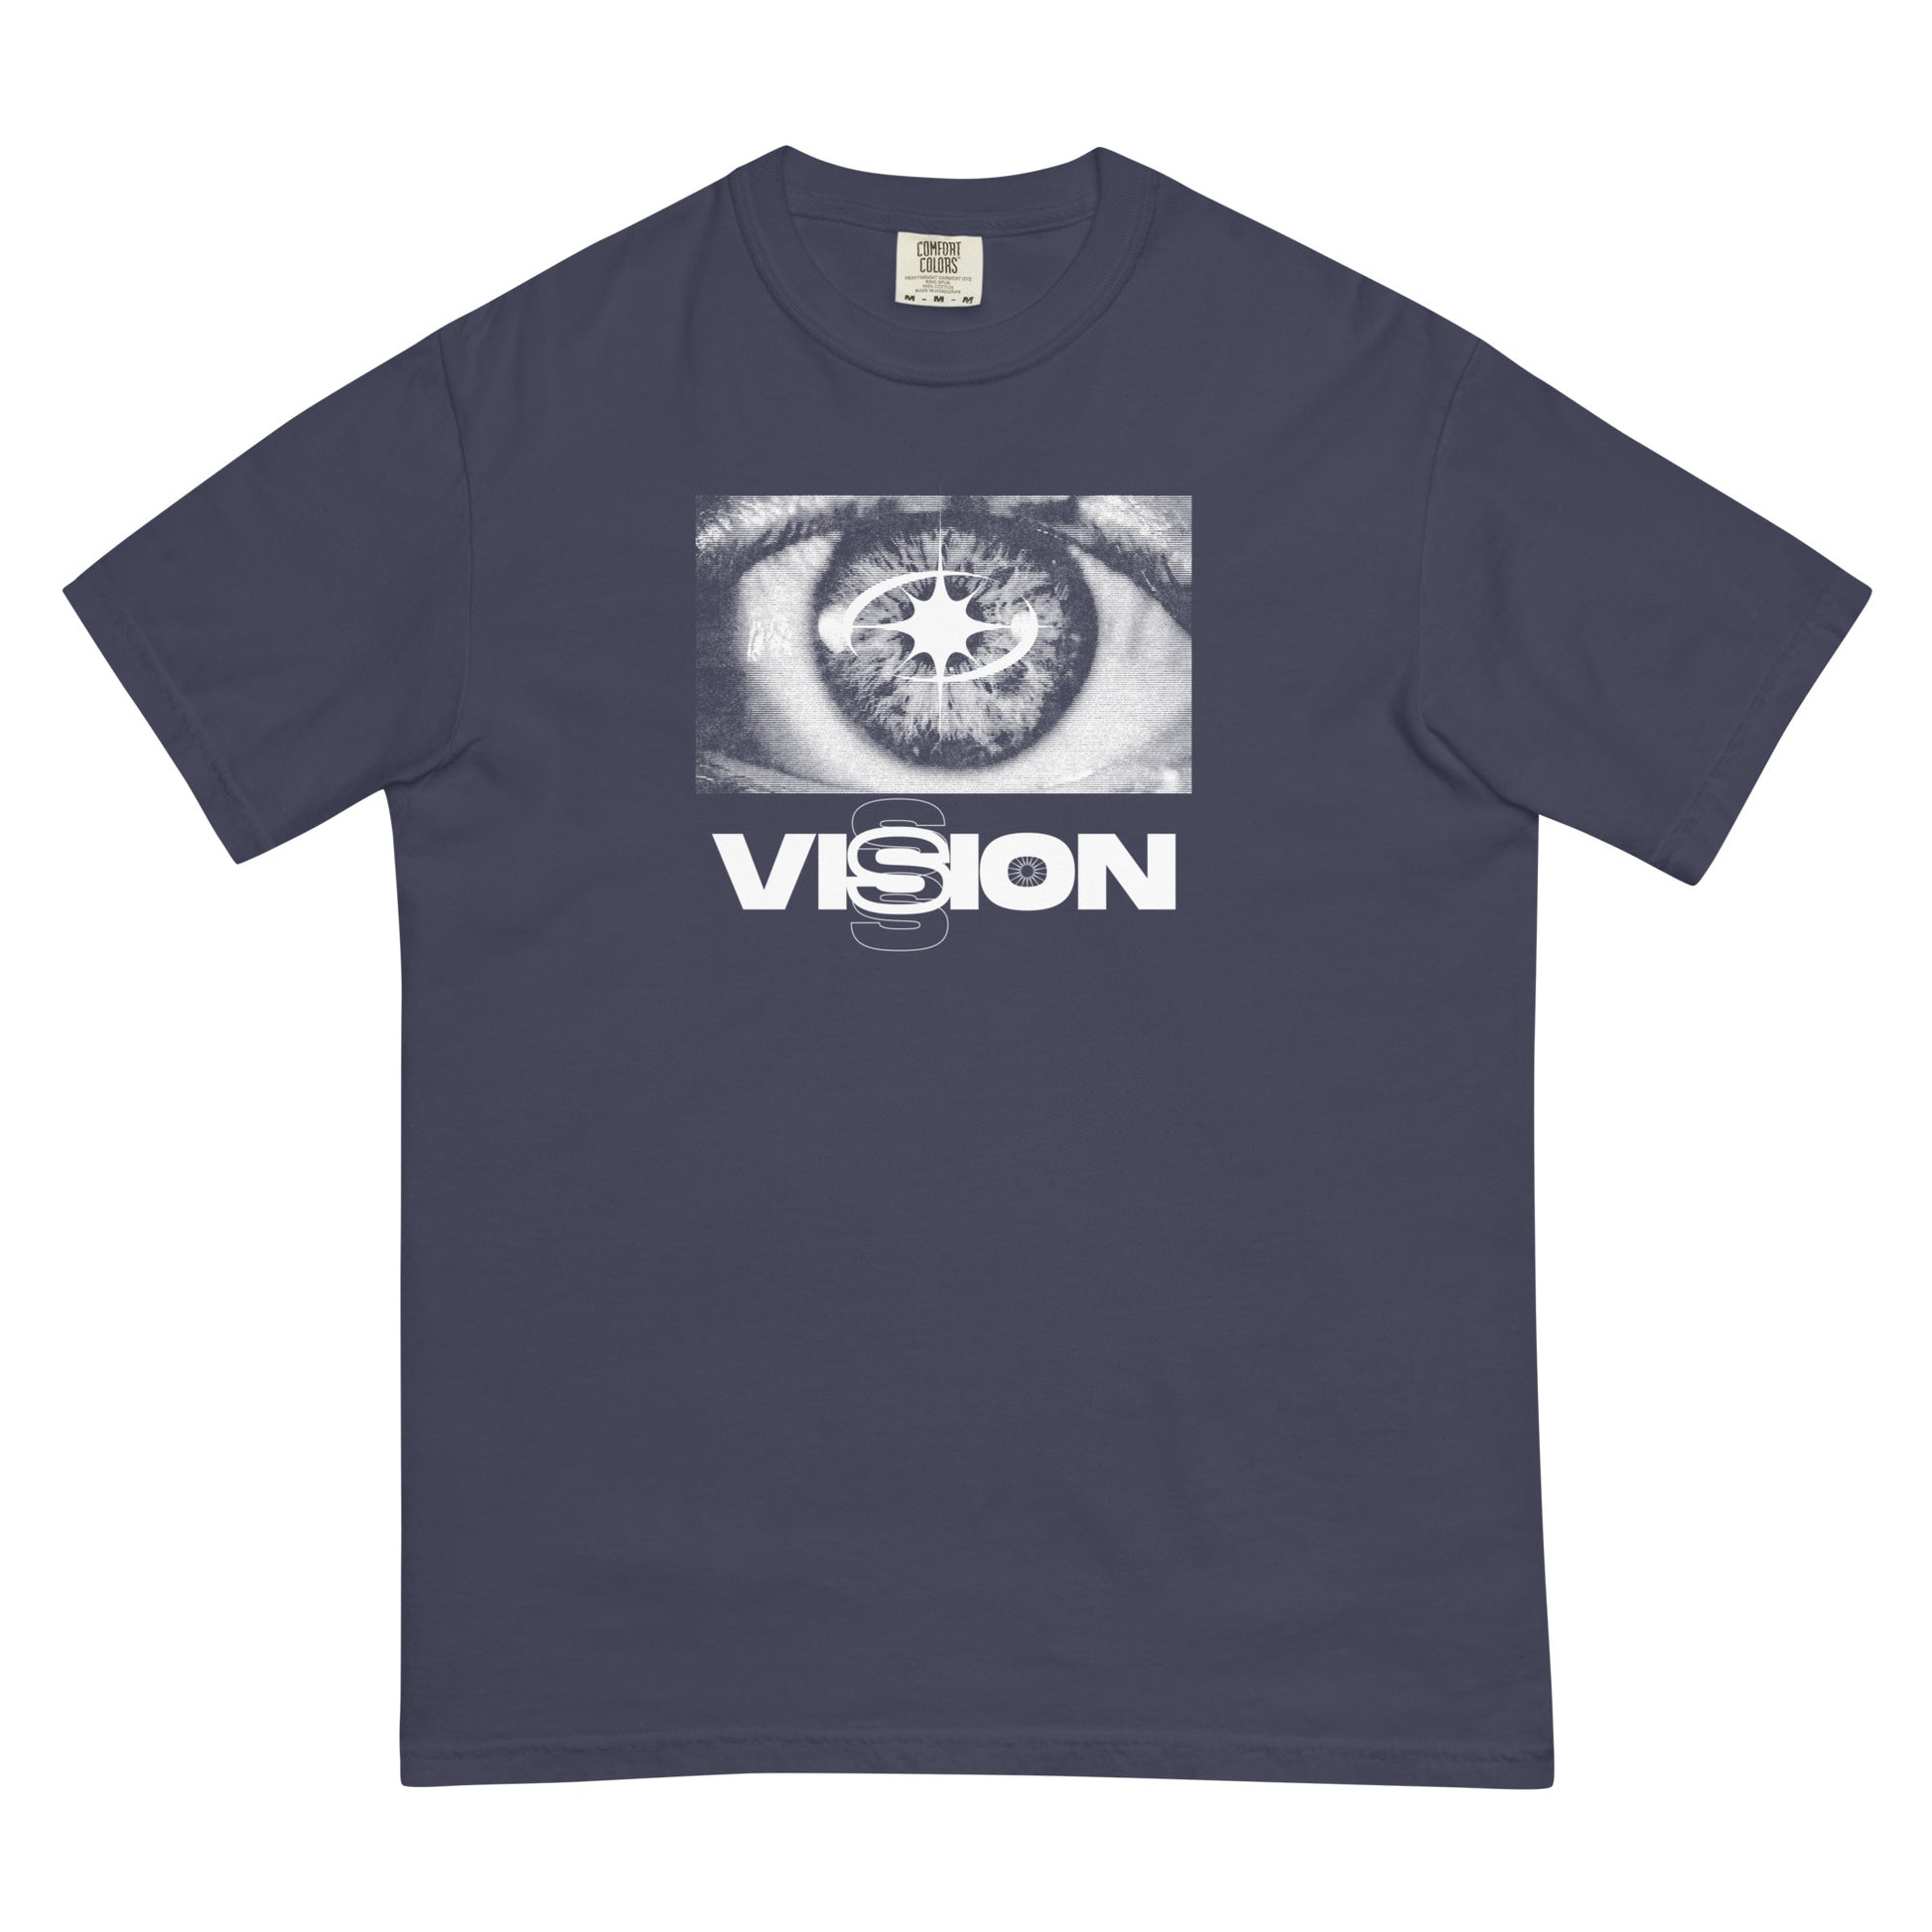 SEEK [Vision] - Black & Navy - IKendoit.Shop